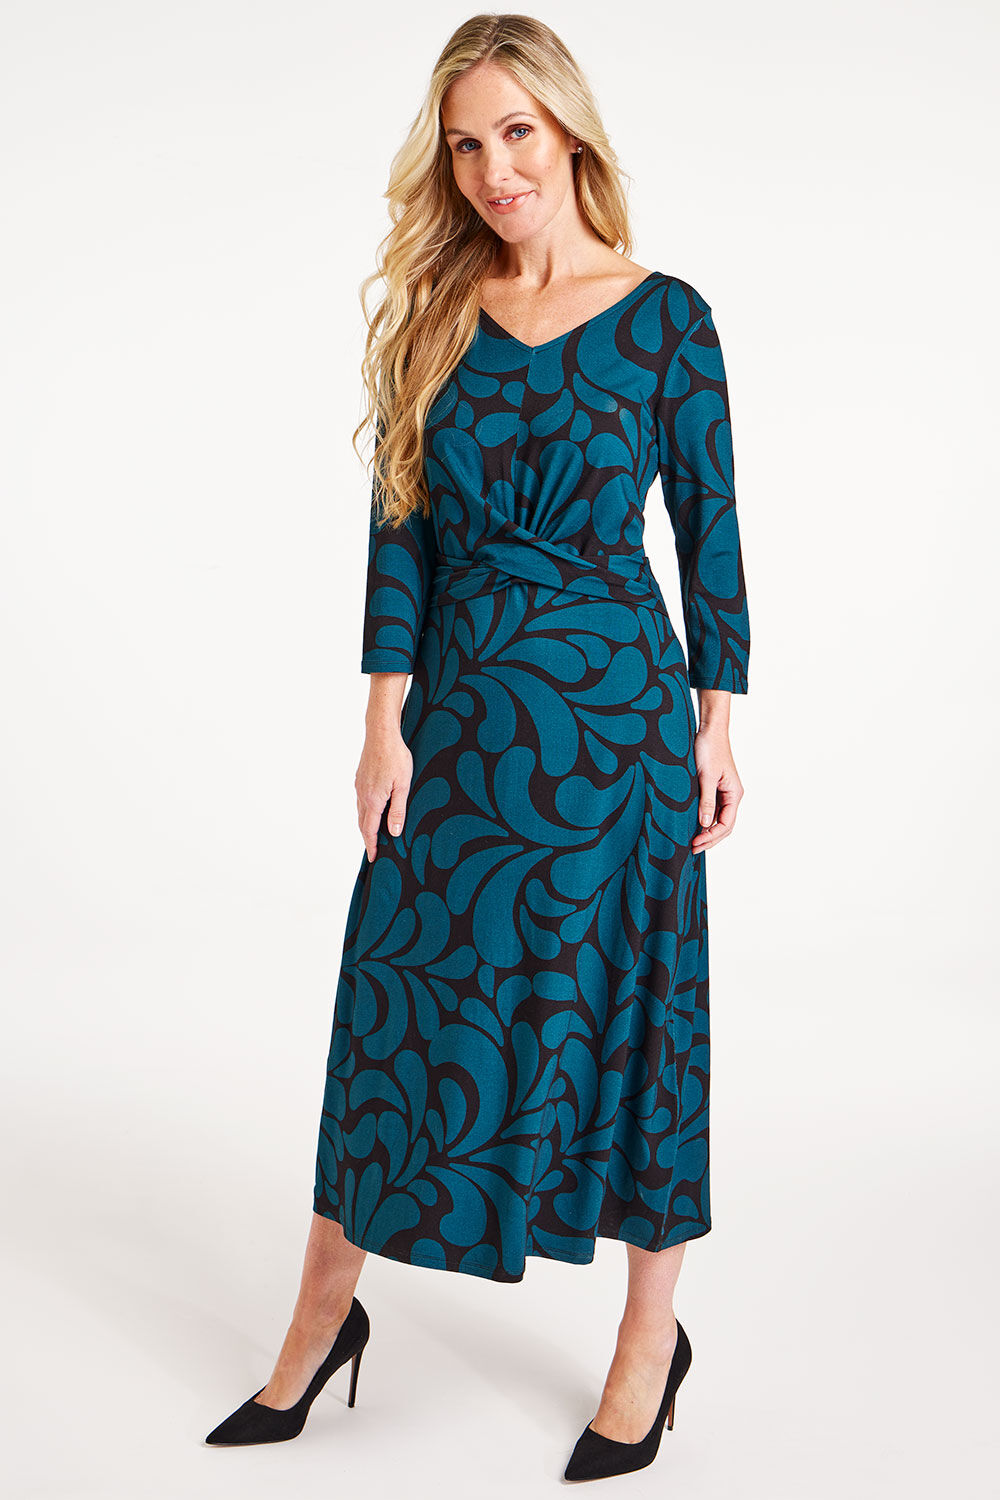 Bonmarche Women’s Green and Black Viscose Swirl Print Twist Front Jersey Dress, Size: 12